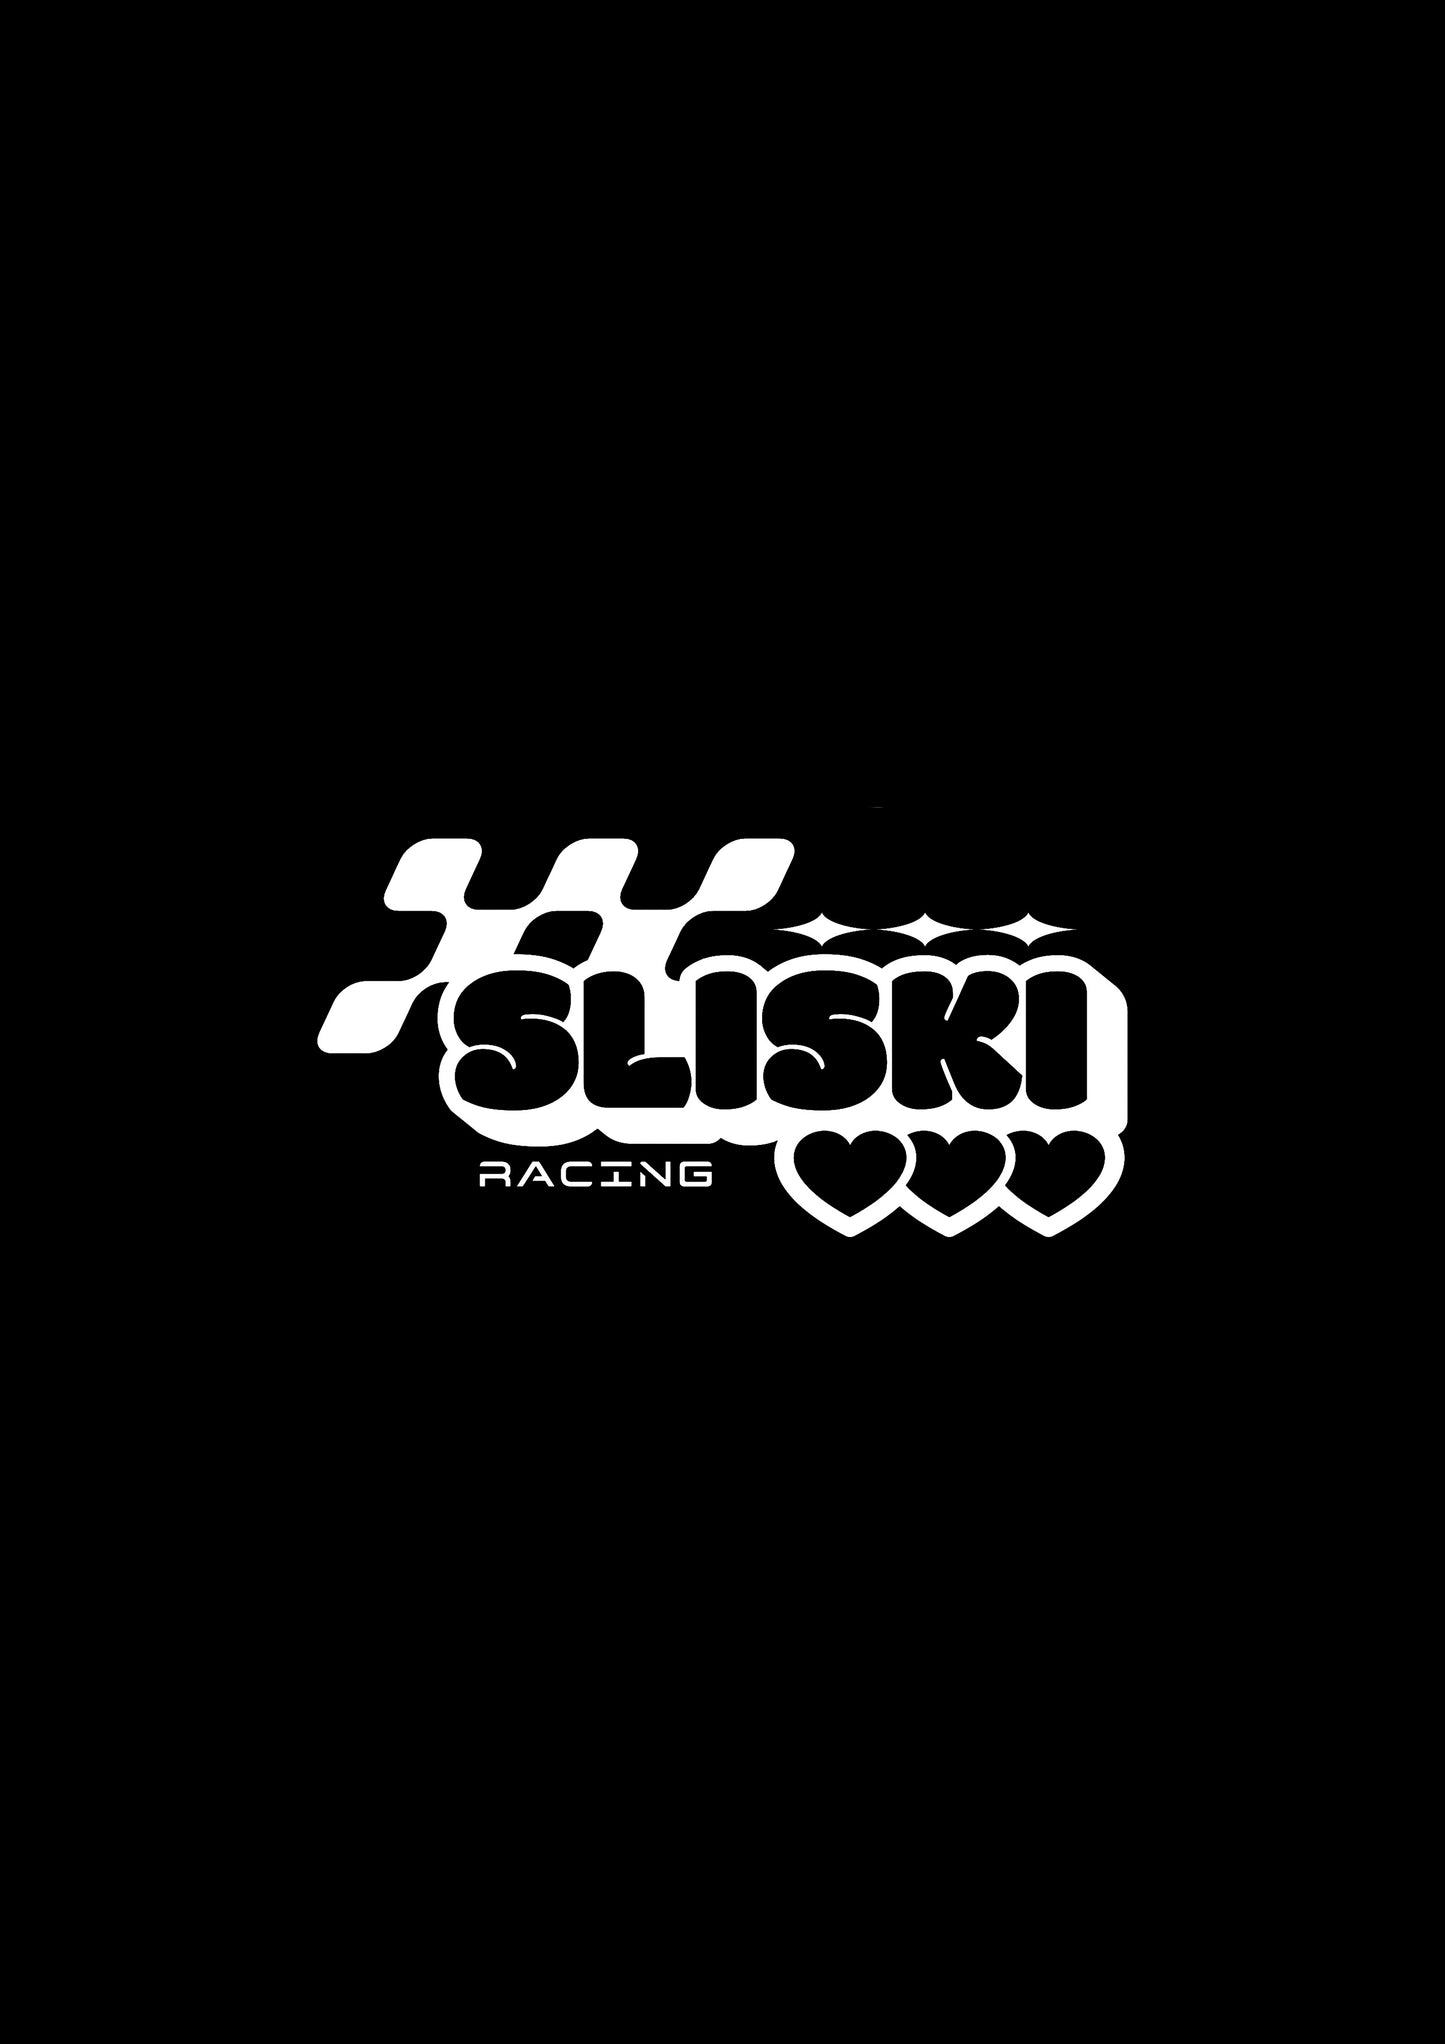 Sliski Racing diecut